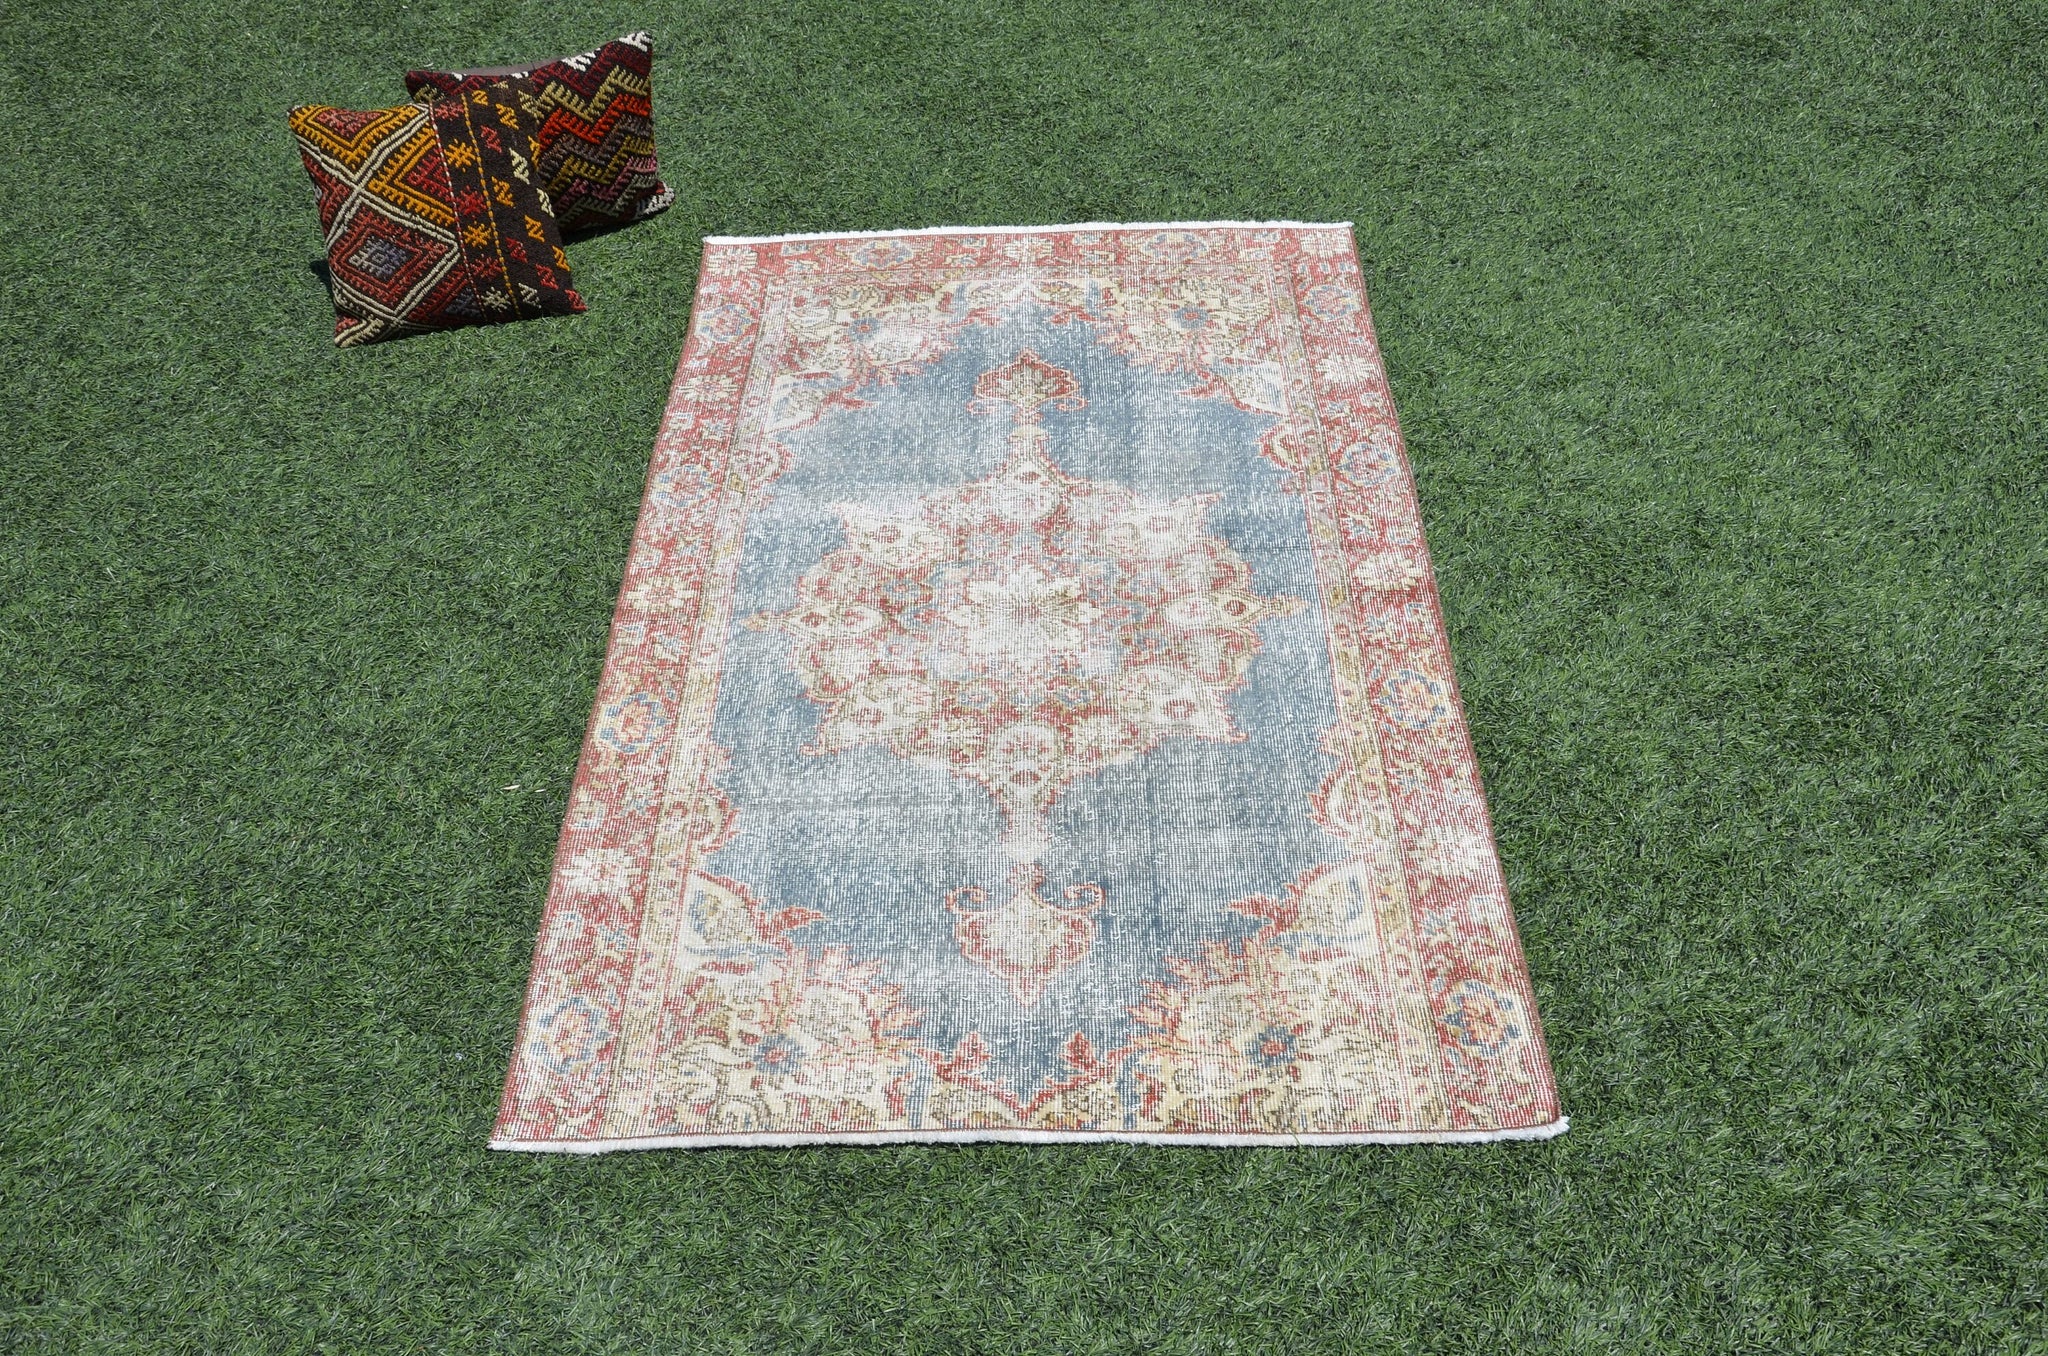 Unique Oushak Turkish rug for home decor, Vintage rug, area rug boho rug bedroom rug kitchen rug bathroom rug kilim rugs handmade, rugs 4x6, 665437